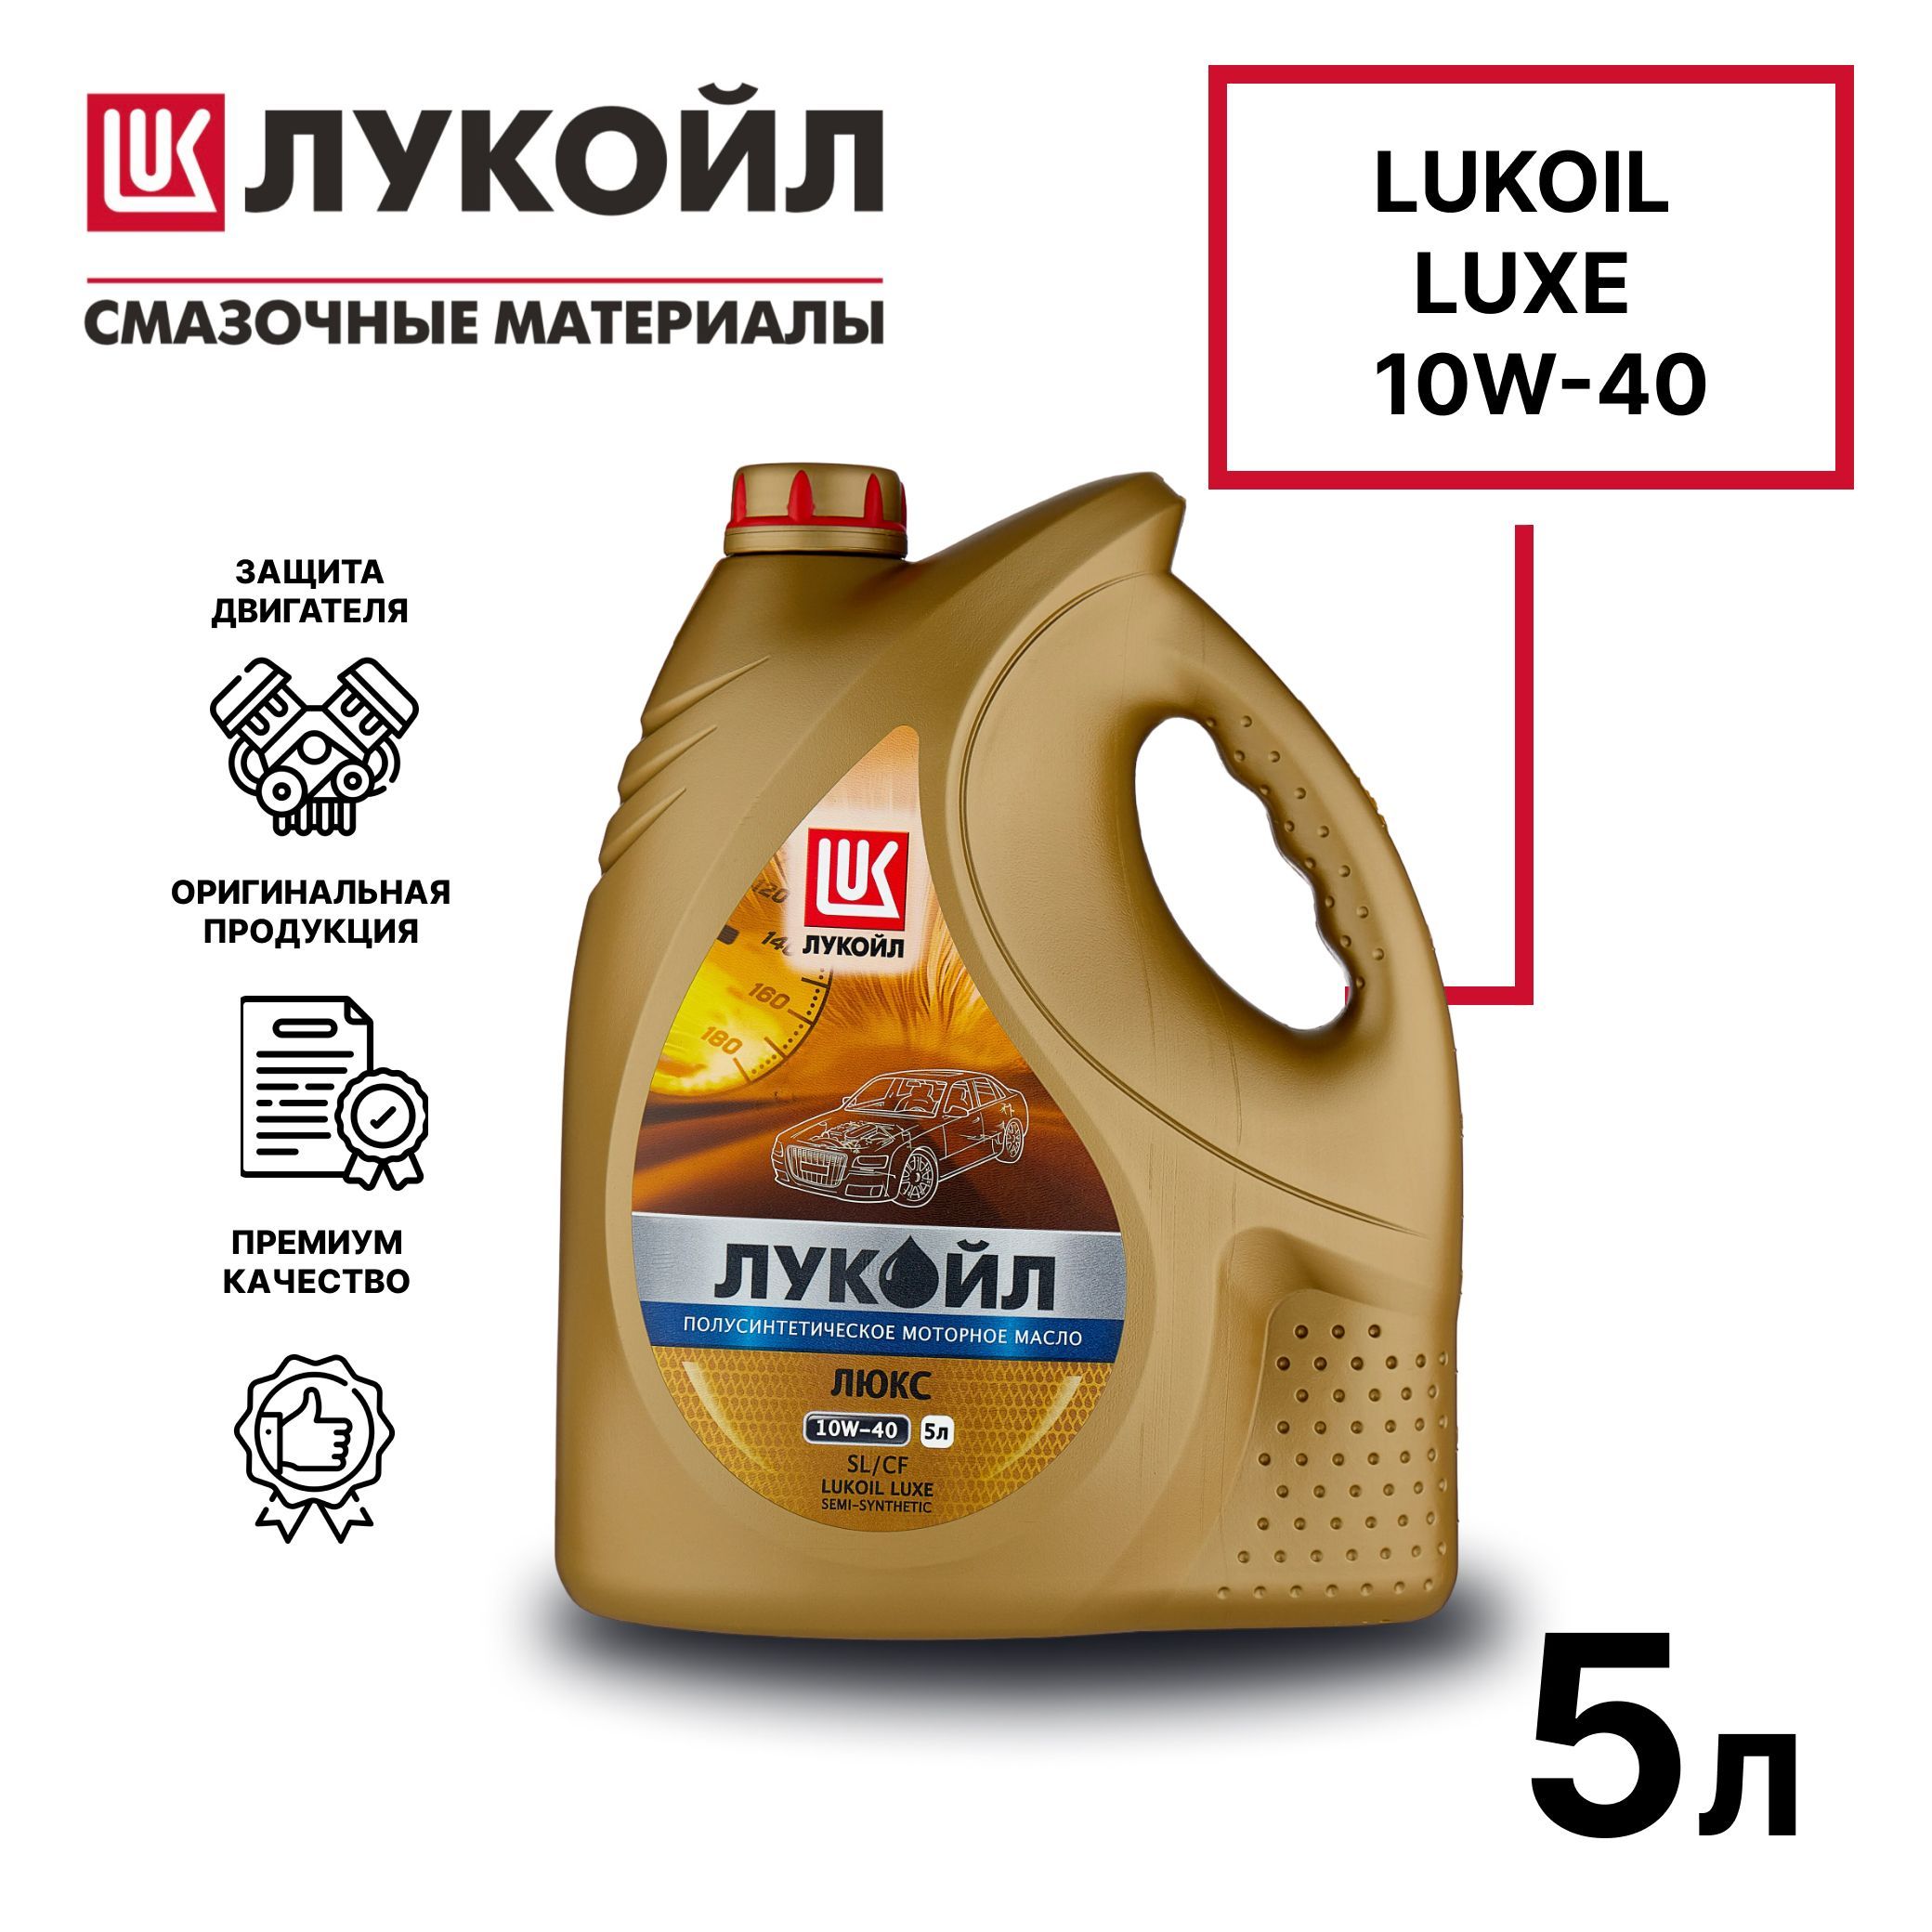 Моторное масло лукойл люкс отзывы. Lukoil Luxe 10w-40. Лукойл Люкс 5 40 SL/CF. Лукойл Люкс 10 w40 ЫД са. Лукоид Люкс 10и40 5л.